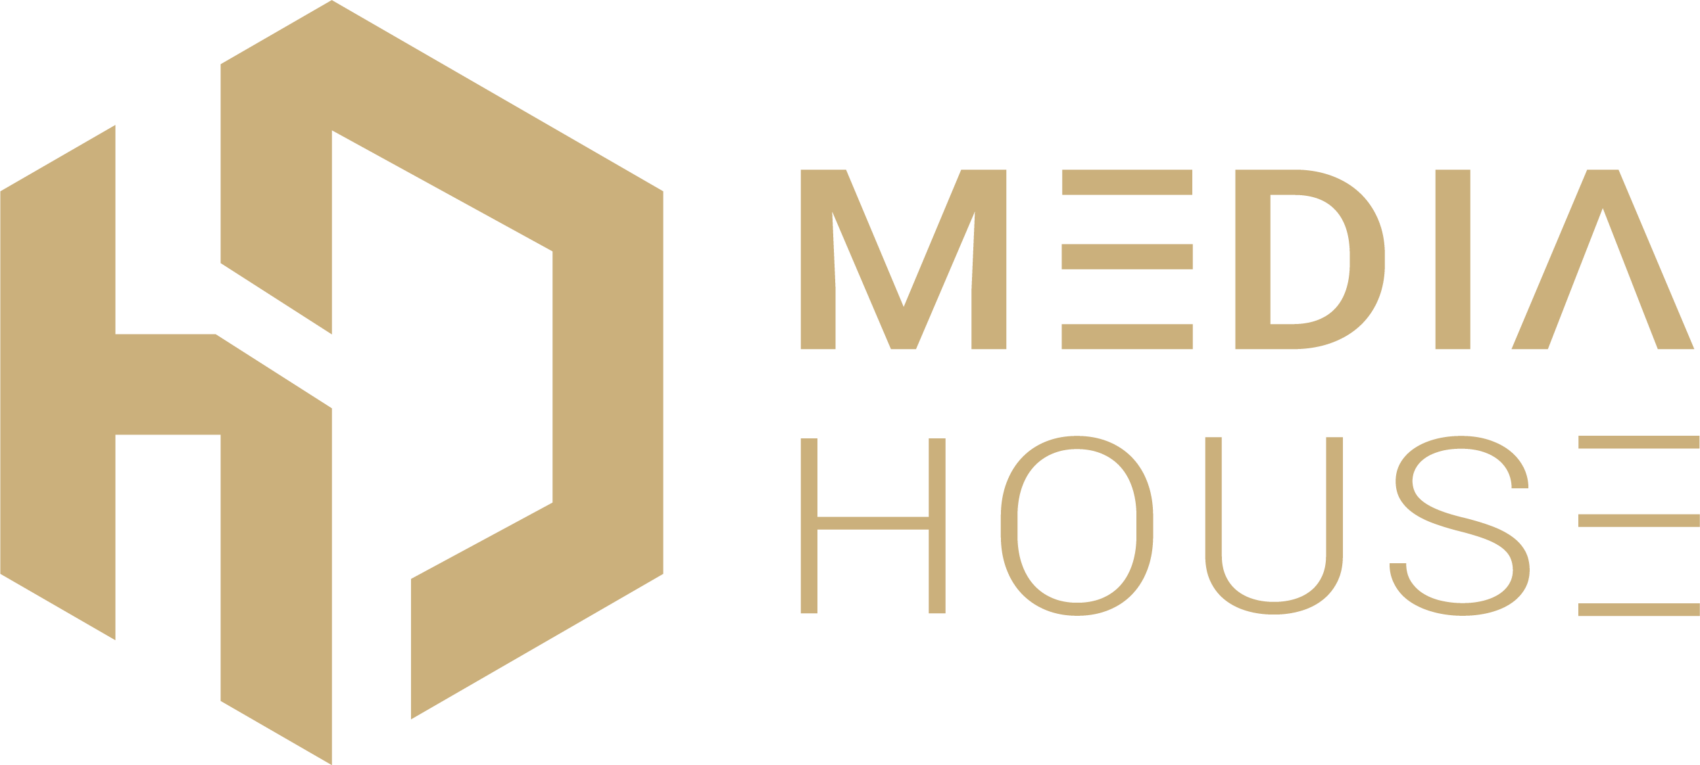 HD Media House